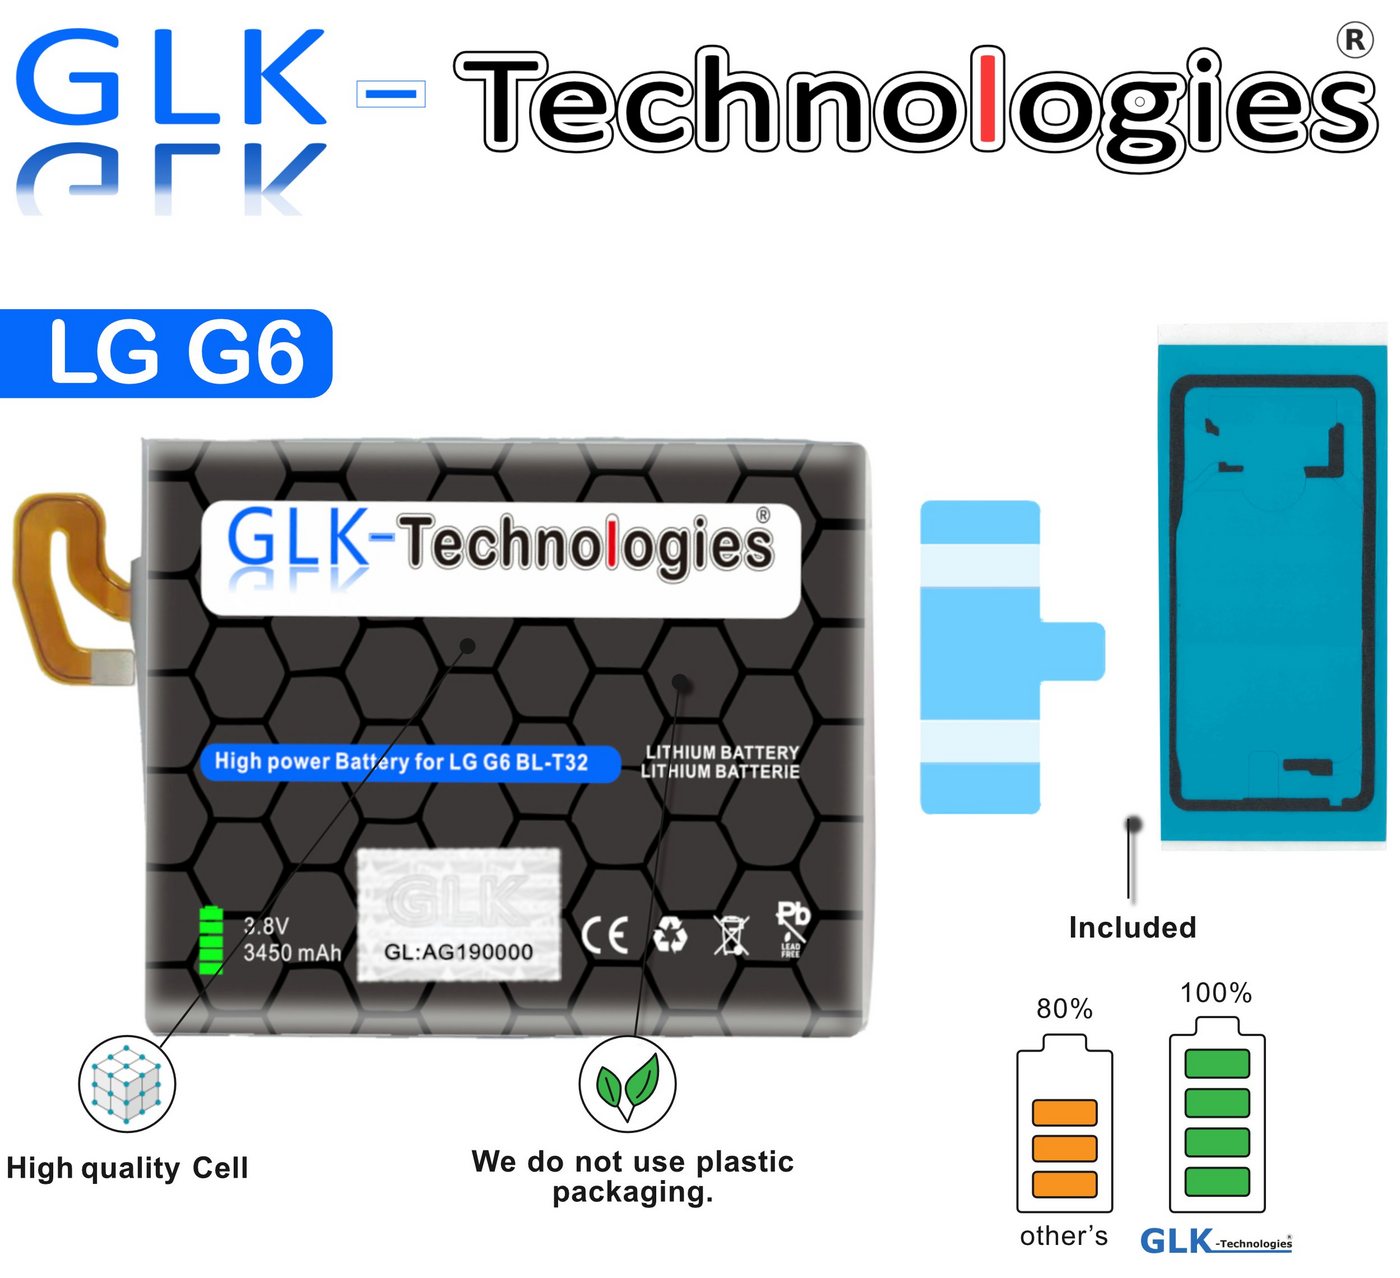 GLK-Technologies High Power Ersatzakku kompatibel mit LG G6 G6+ H870 H871 H872 LS993 VS998, GLK-Technologies Battery, accu, 3450 mAh Akku, Ohne Set Smartphone-Akku 3450 mAh von GLK-Technologies